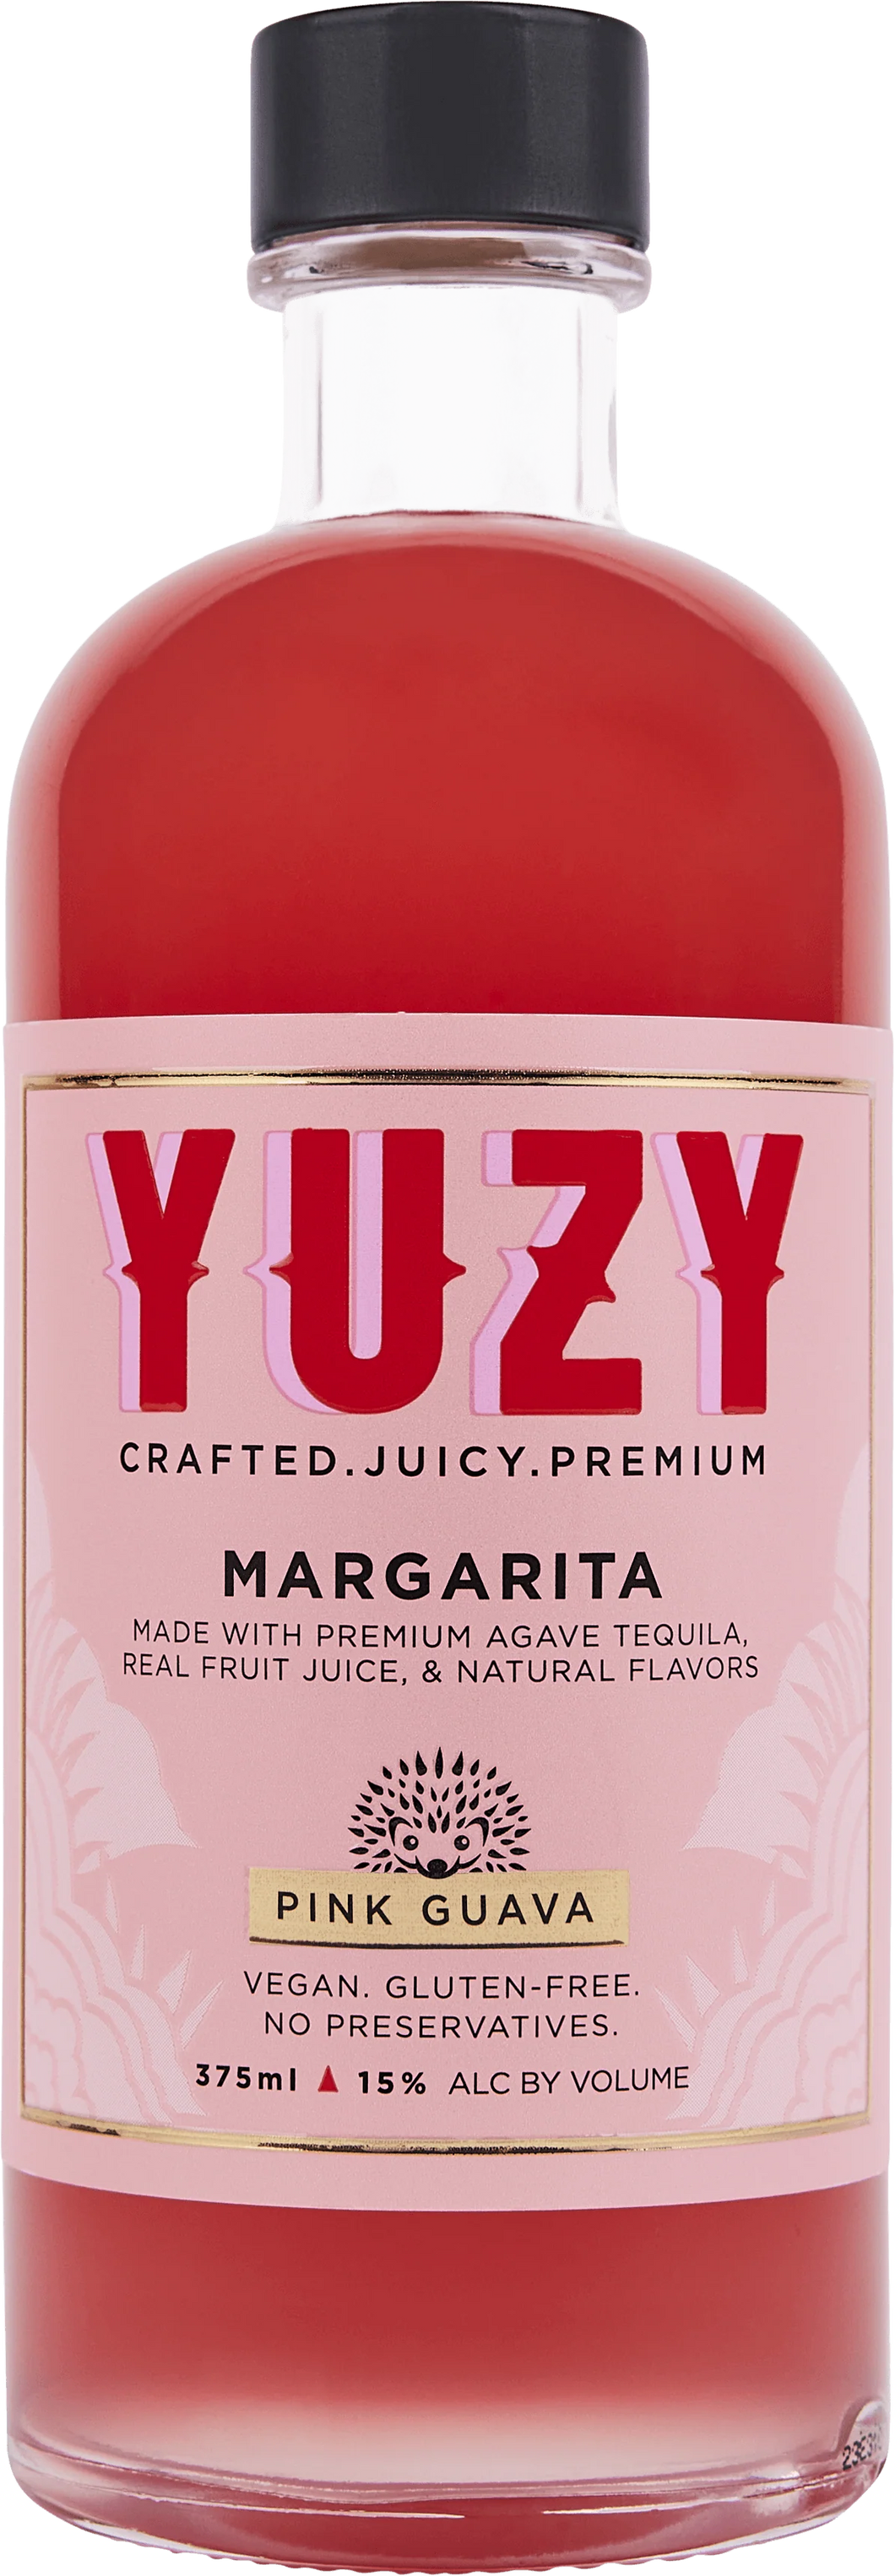 Yuzy Margarita Pink Guava